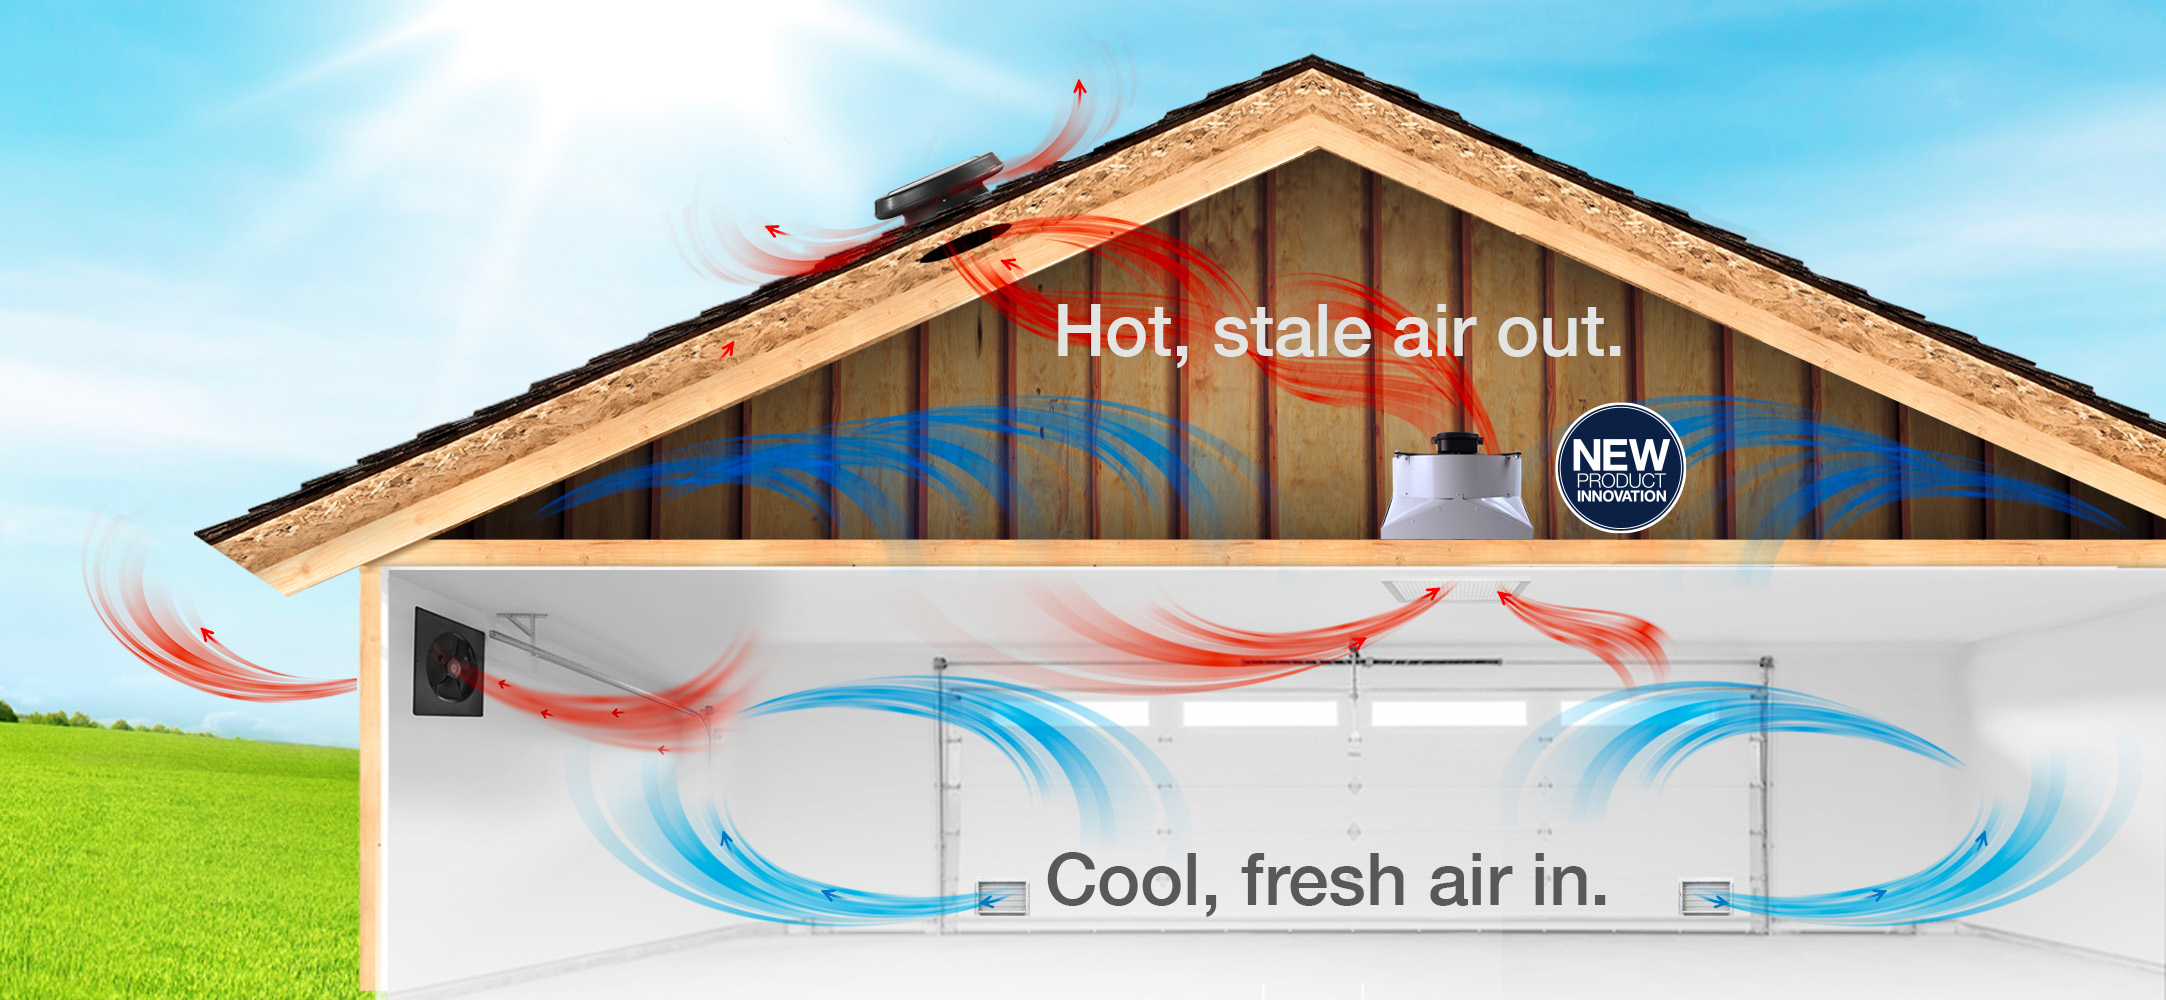 Whole house fan brings in fresh cool air.